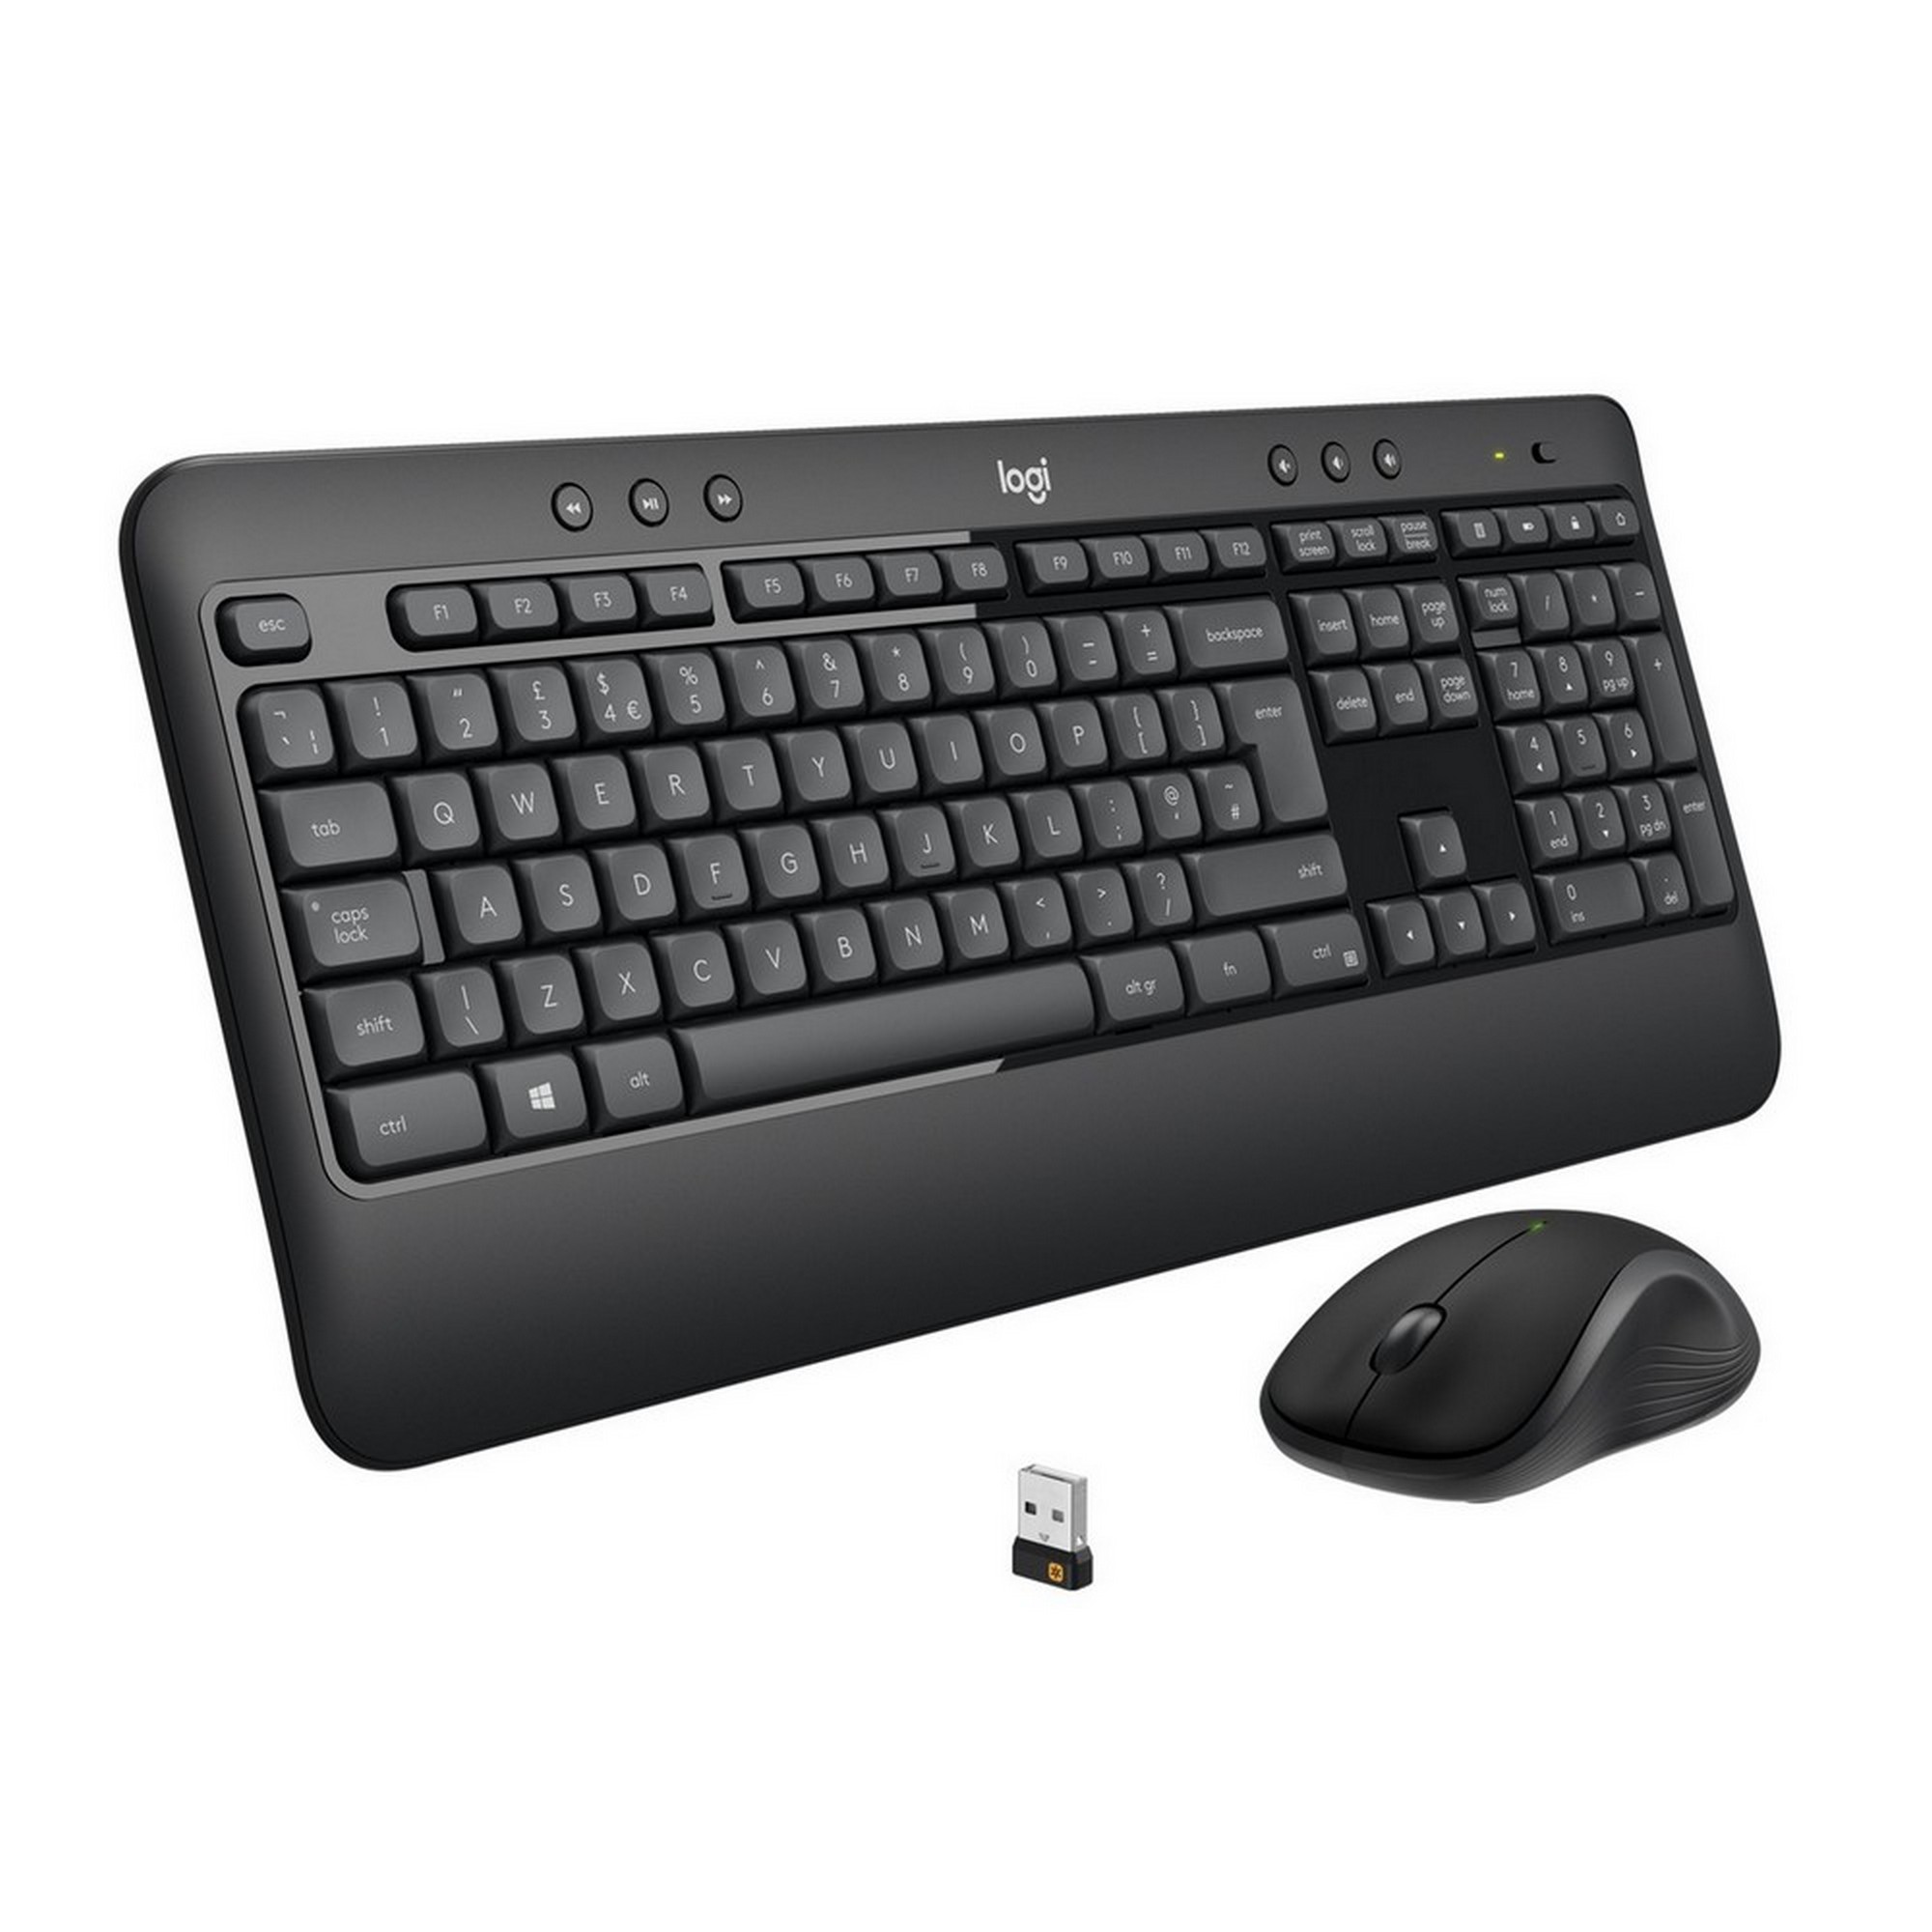 Комплект (клавиатура + мышь) Logitech Wireless Desktop Advanced MK540  Retail